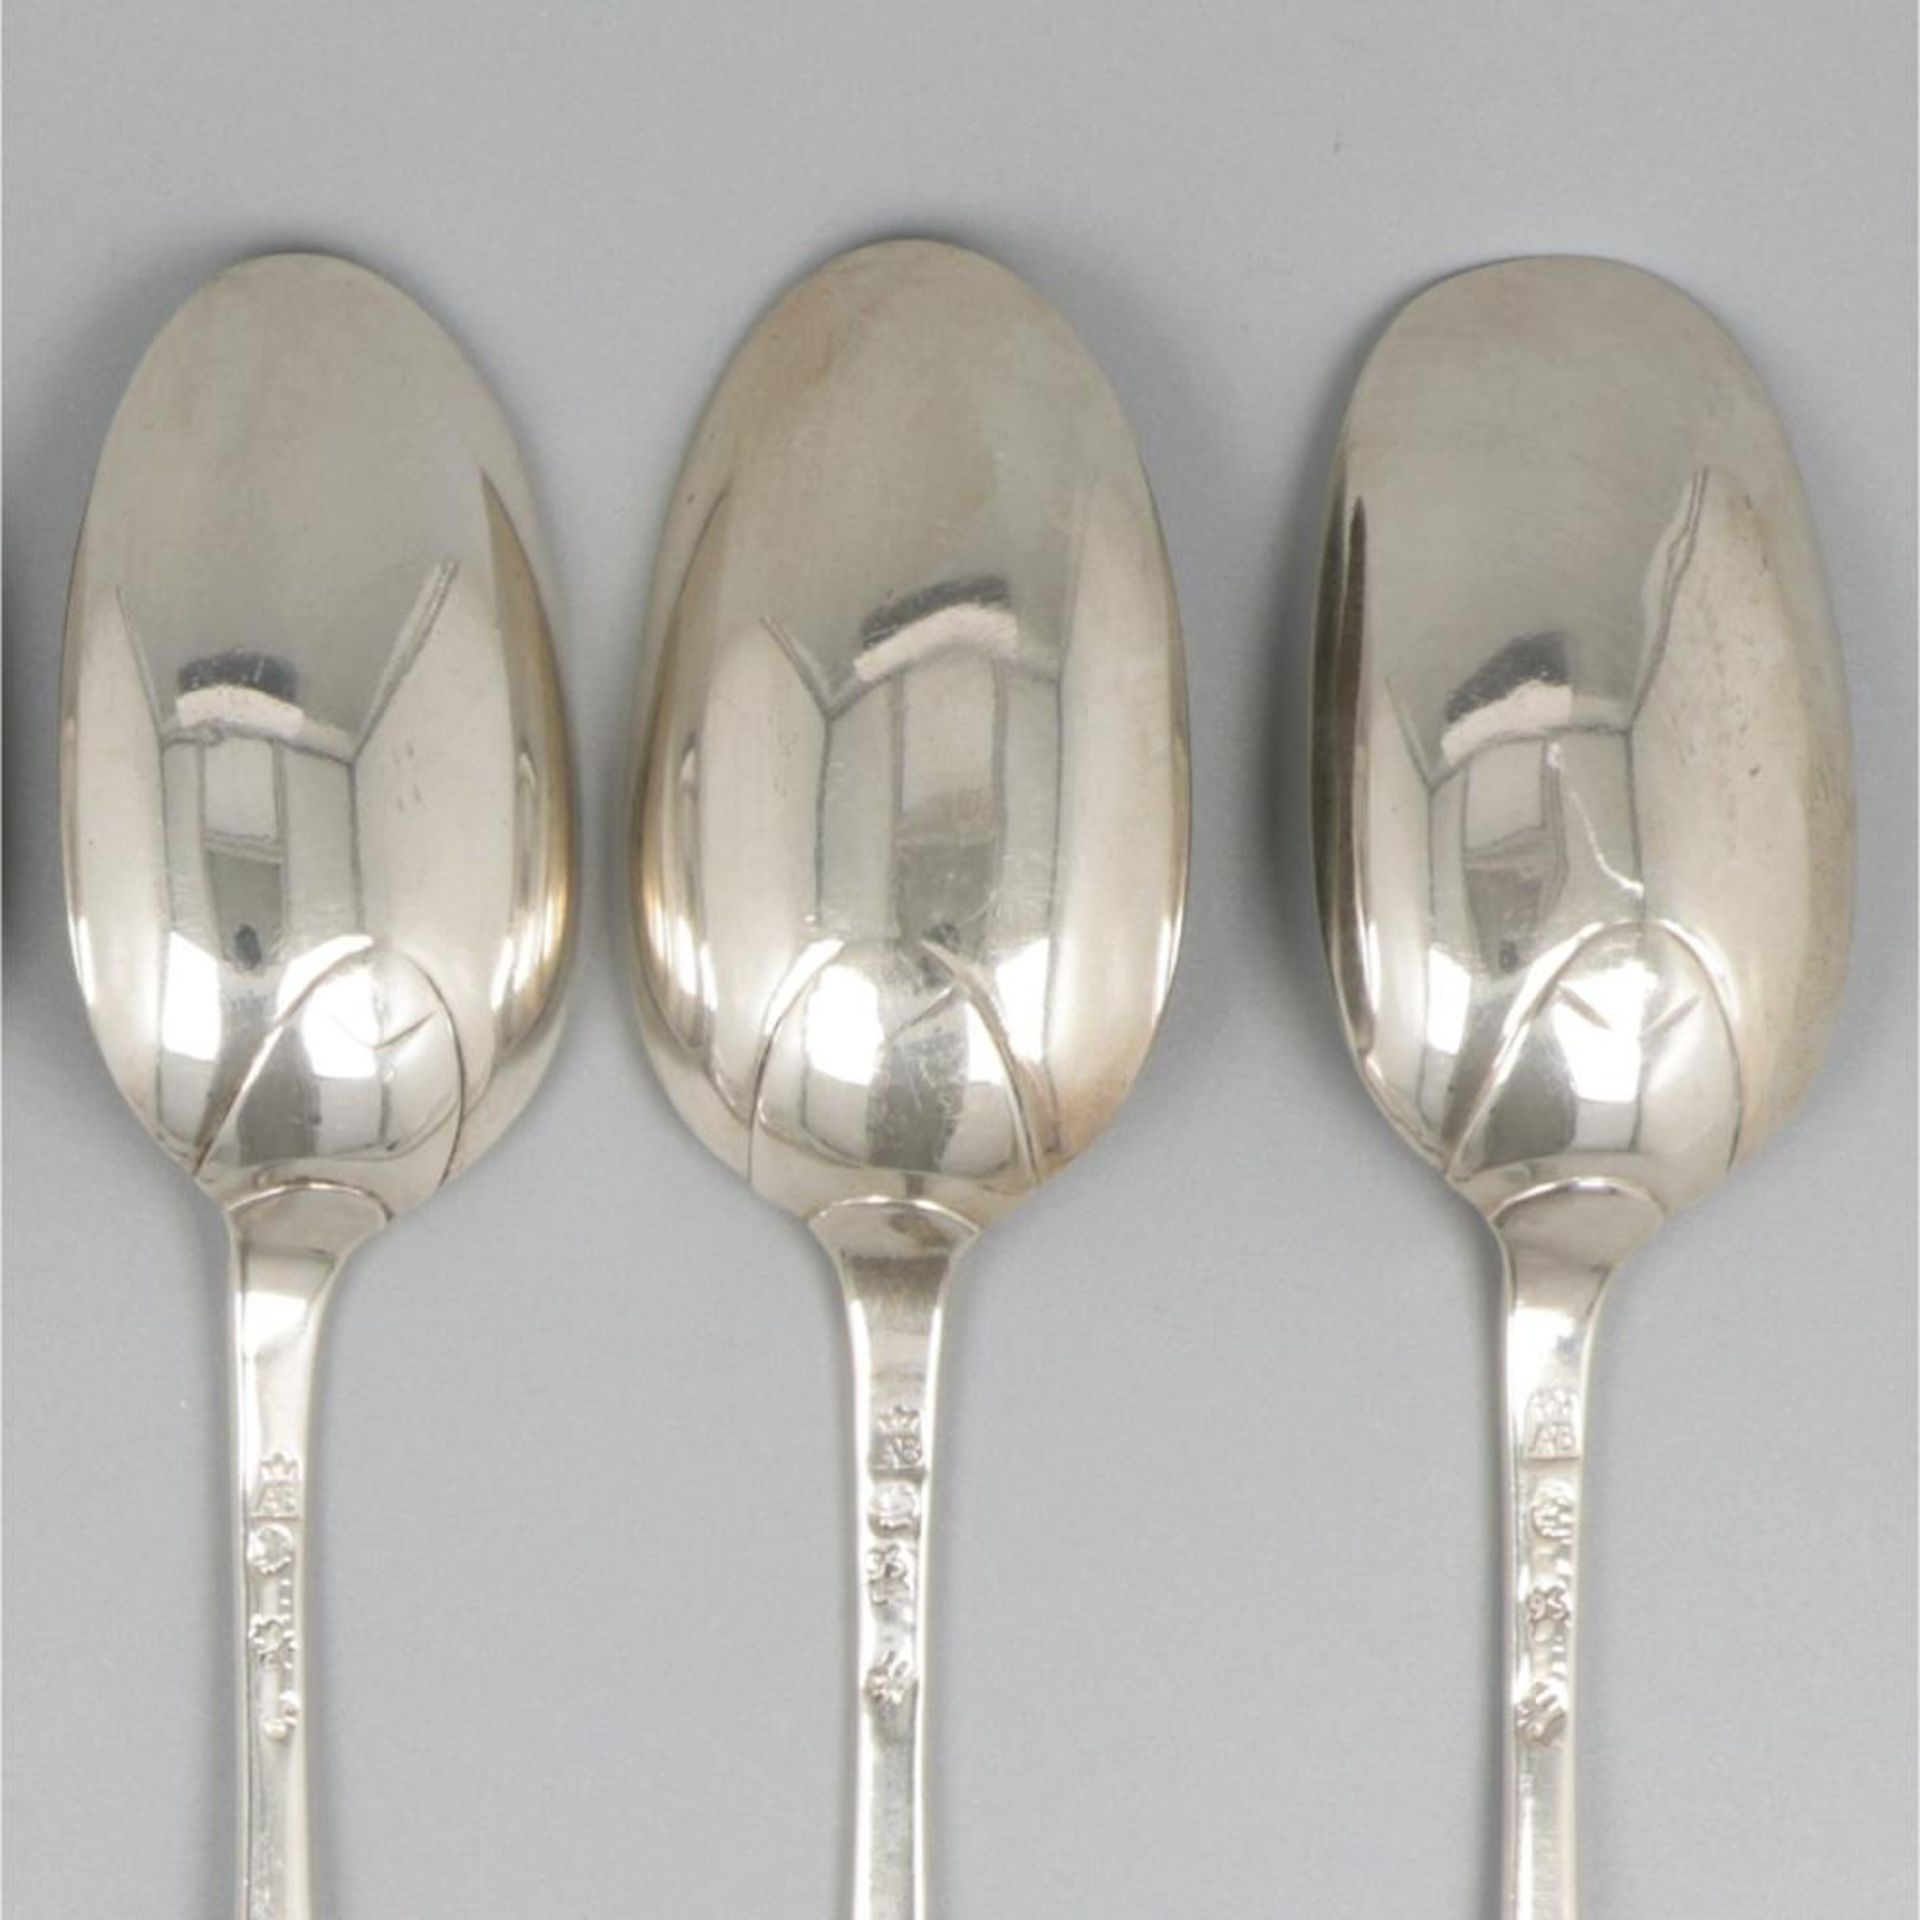 Set of 6 spoons (Bruges, Belgium, Adrianus Buschop 1756) silver. - Image 3 of 8